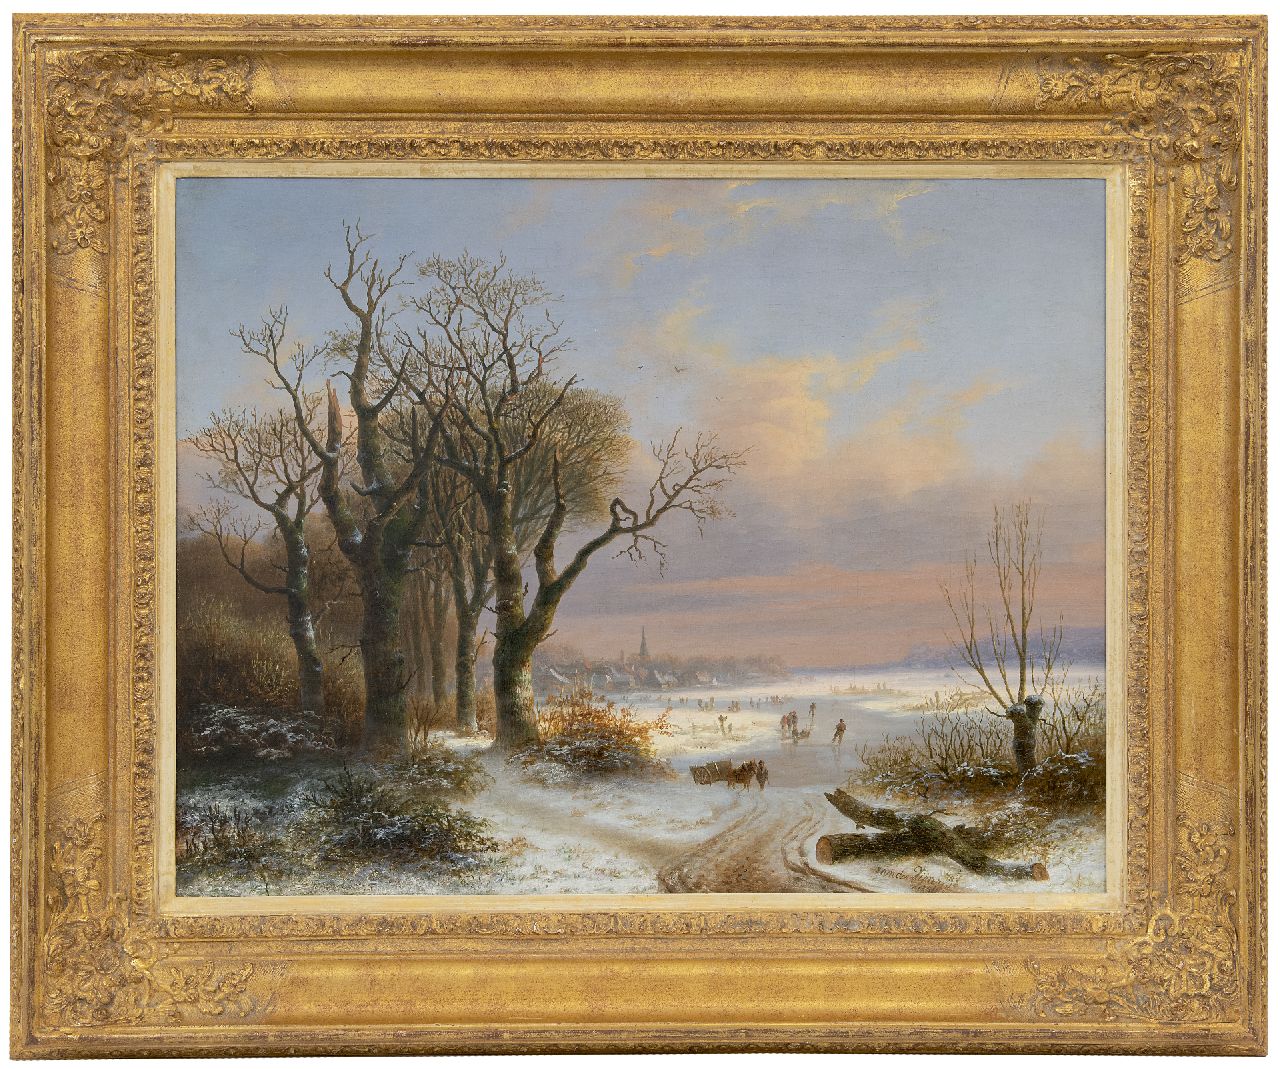 Vijver W.S.P. van der | Willem Simon Petrus van der Vijver, A winter landscape with skaters near a village, oil on canvas 48.8 x 62.5 cm, signed l.r. and dated 1854